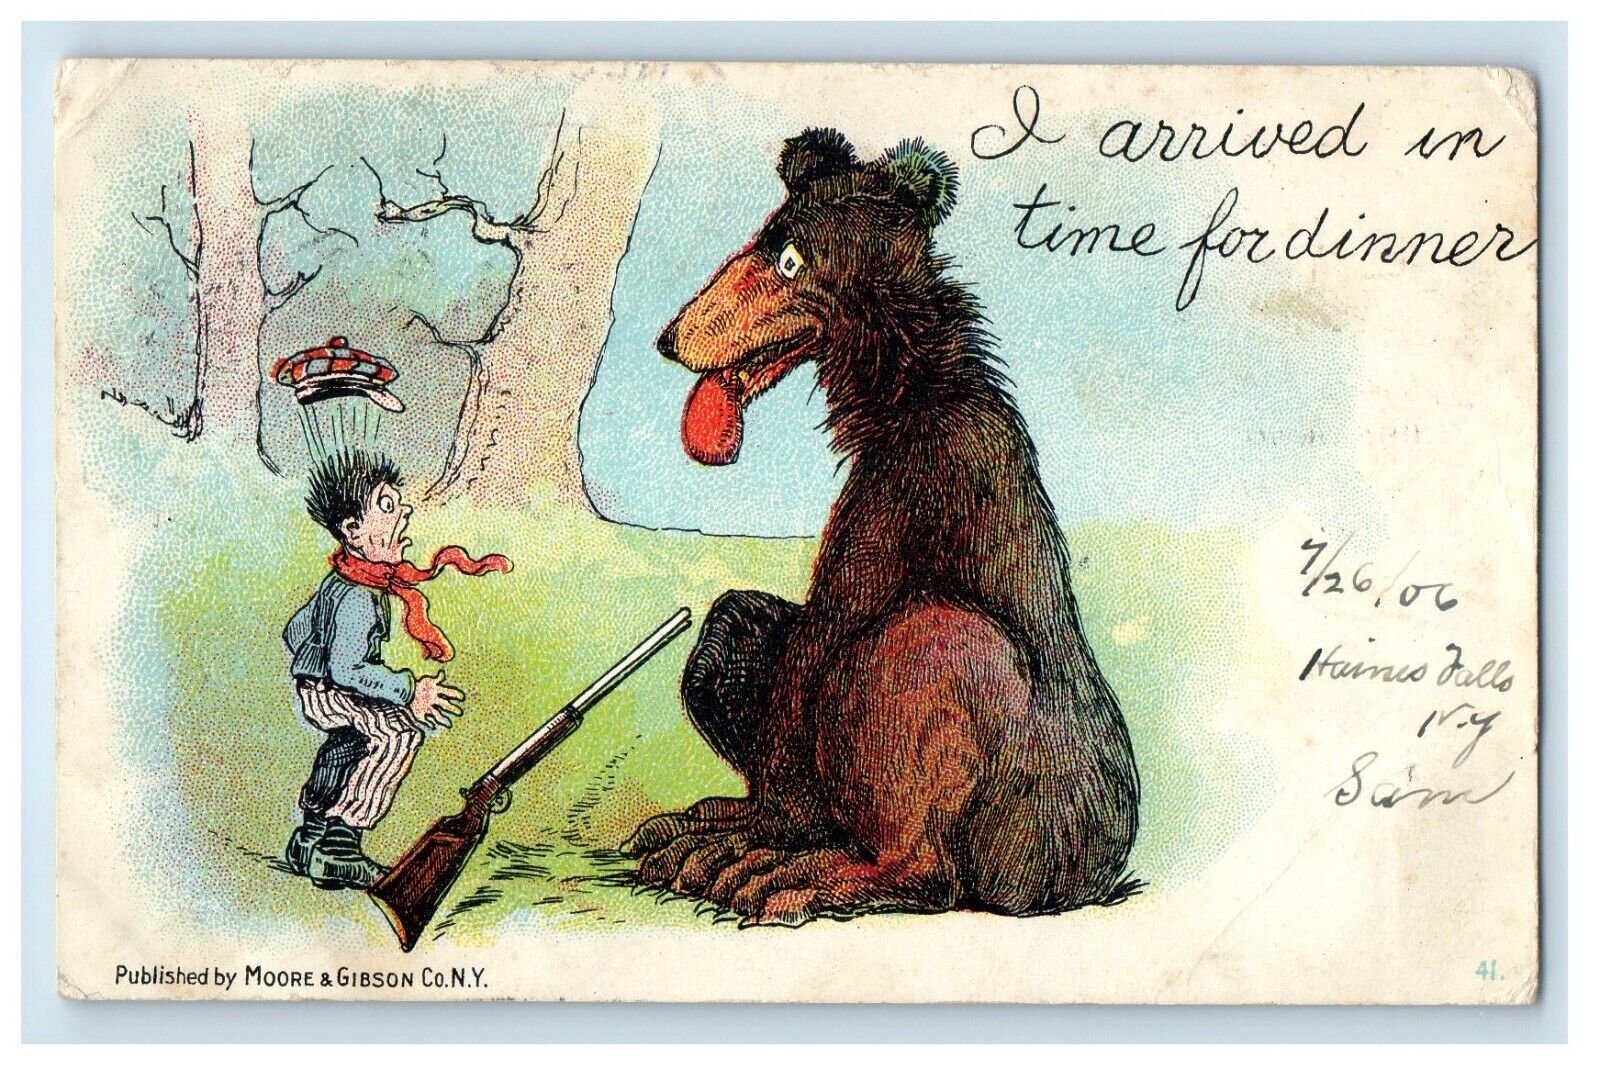 1906 Hunting Black Bear Rifle Rayville Haines Falls NY Moore & Gibson Postcard